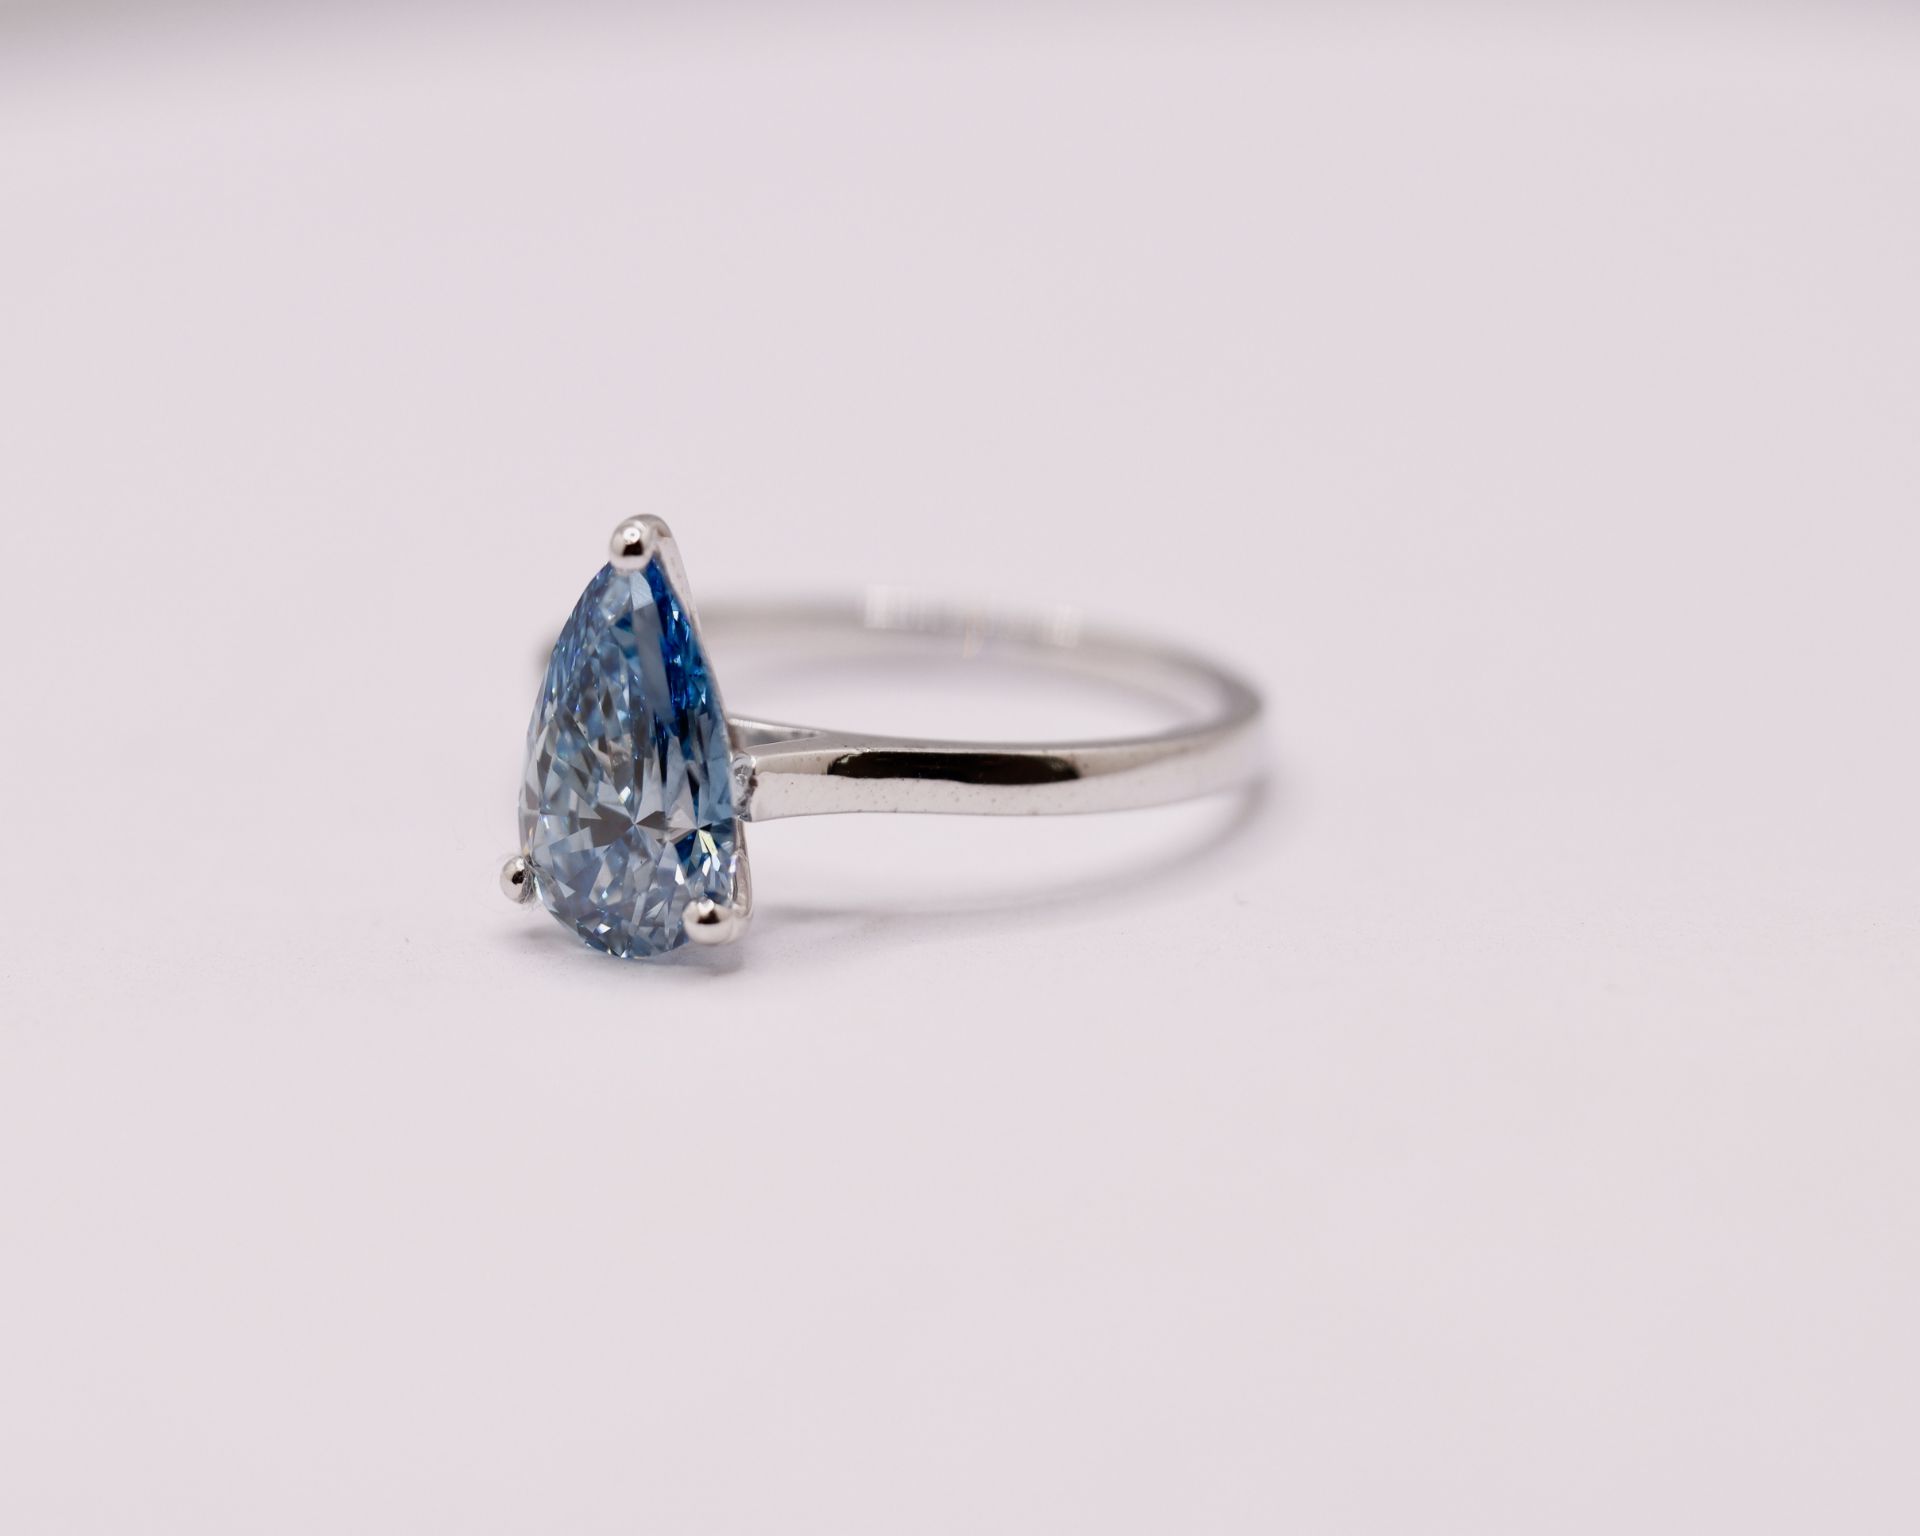 ** ON SALE ** Fancy Blue Pear Cut 1.60 Carat Diamond 18Kt White Gold Ring - VS1 - Image 2 of 6